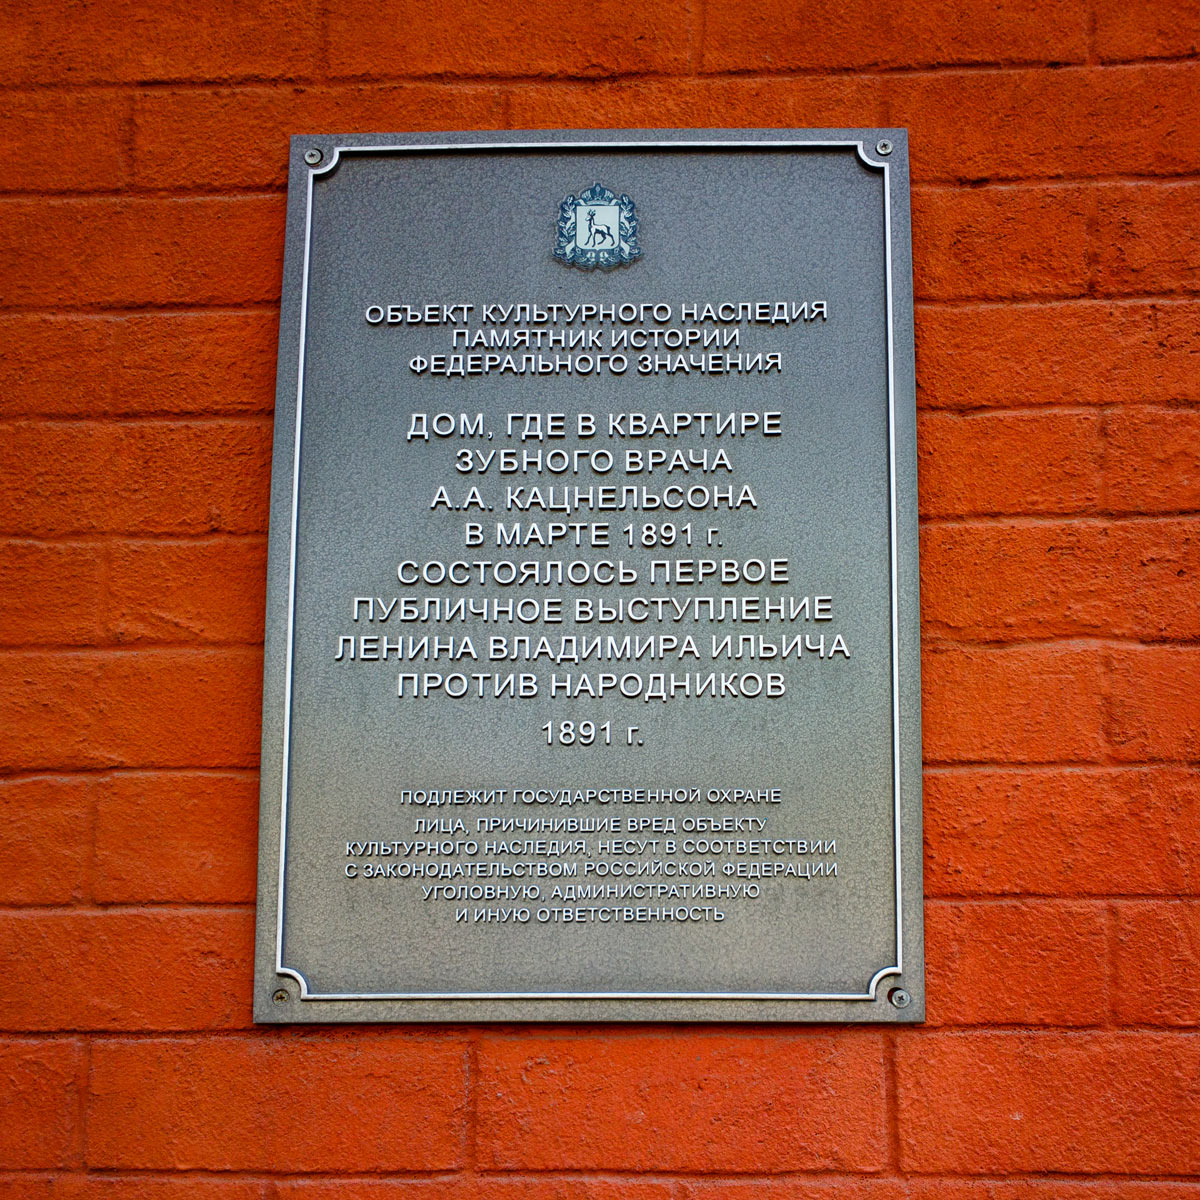 Samara, Улица Куйбышева, 123. Samara — Memorial plaques